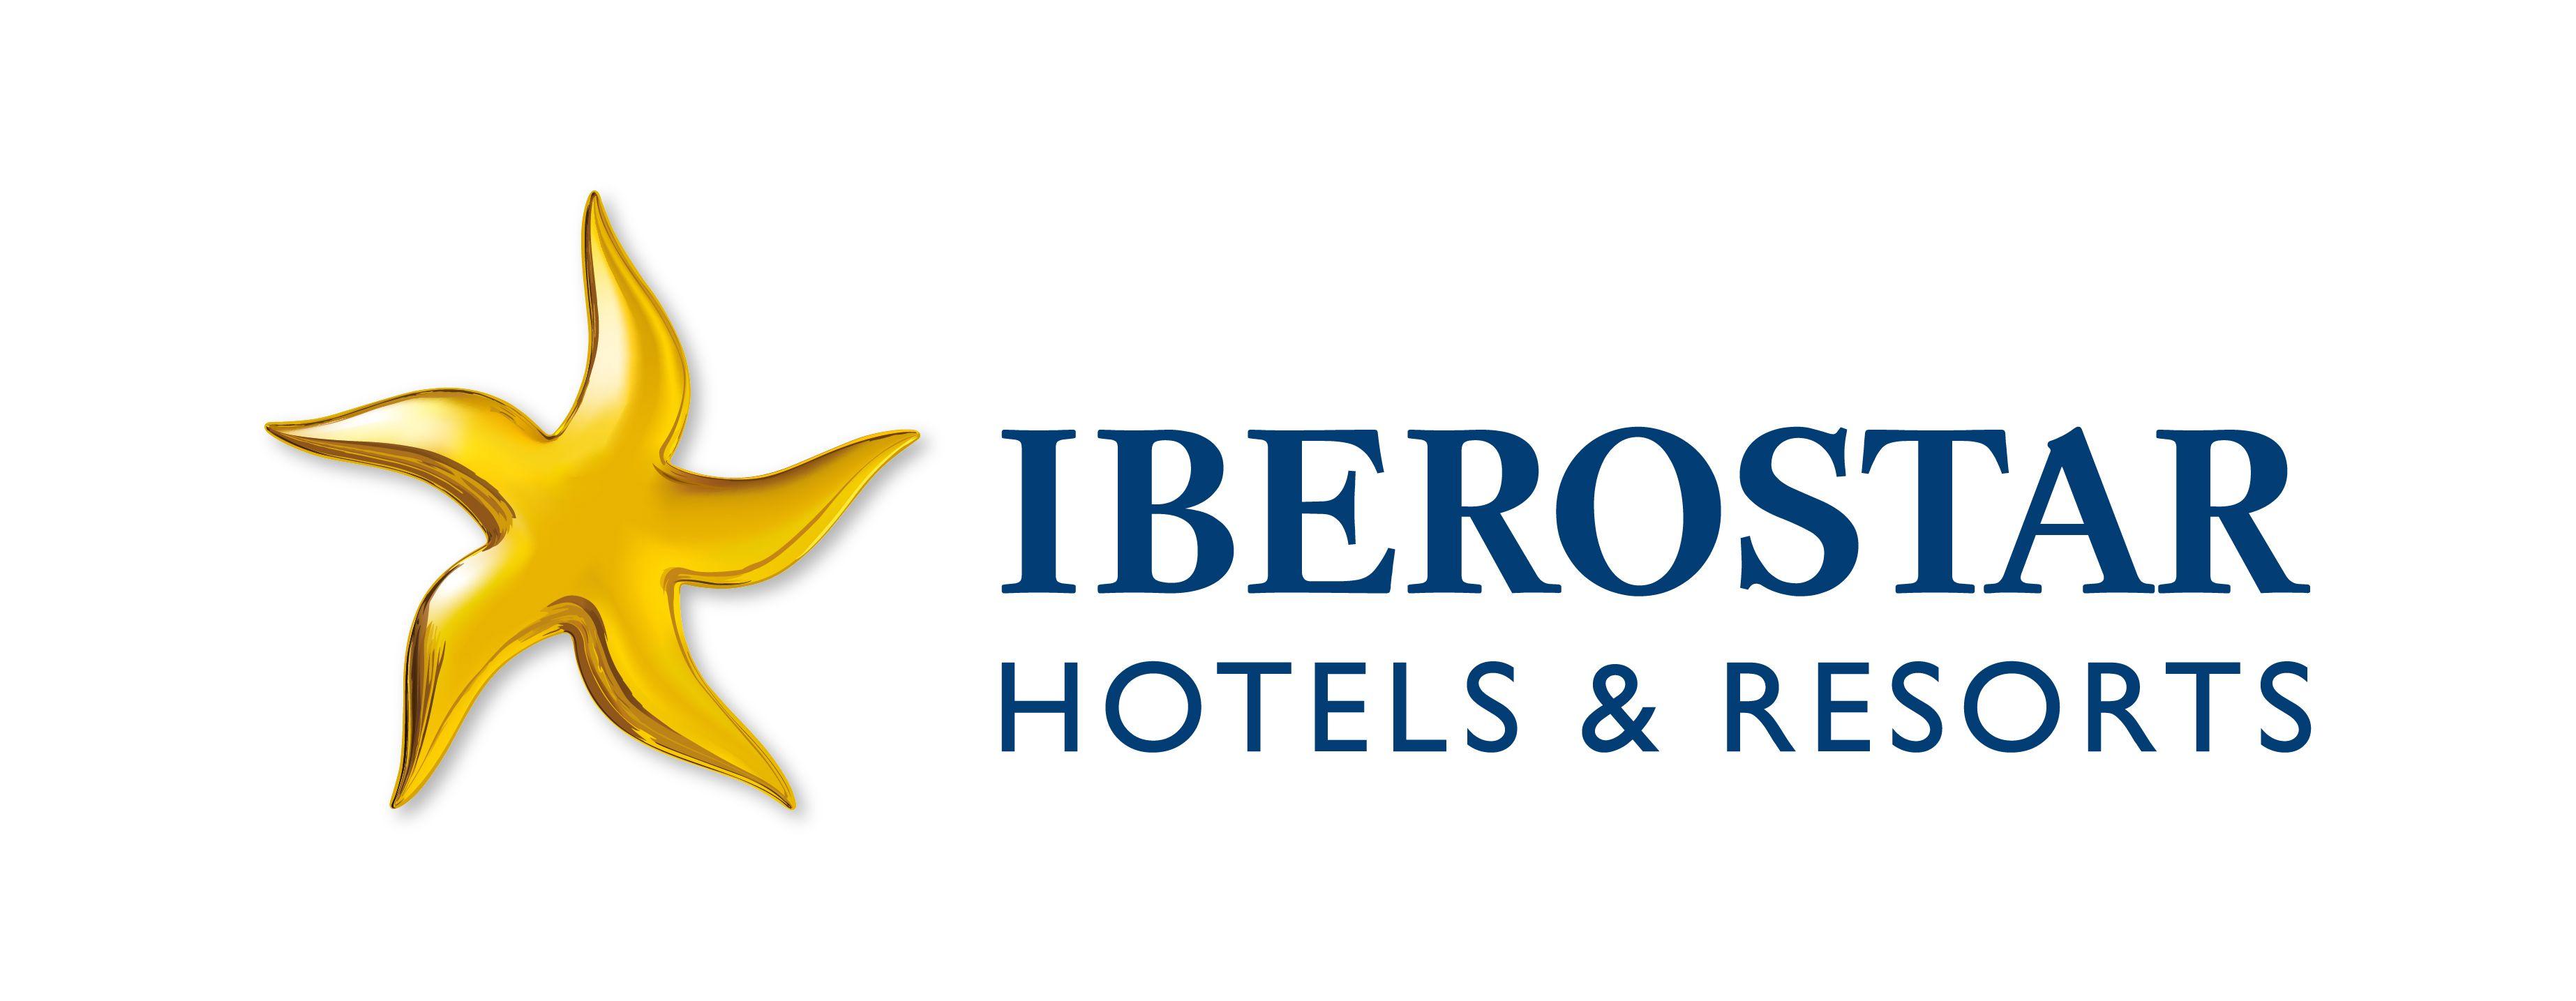 Iberostar Logo - New Iberostar Hotels, Iberostar Hotels and Resorts